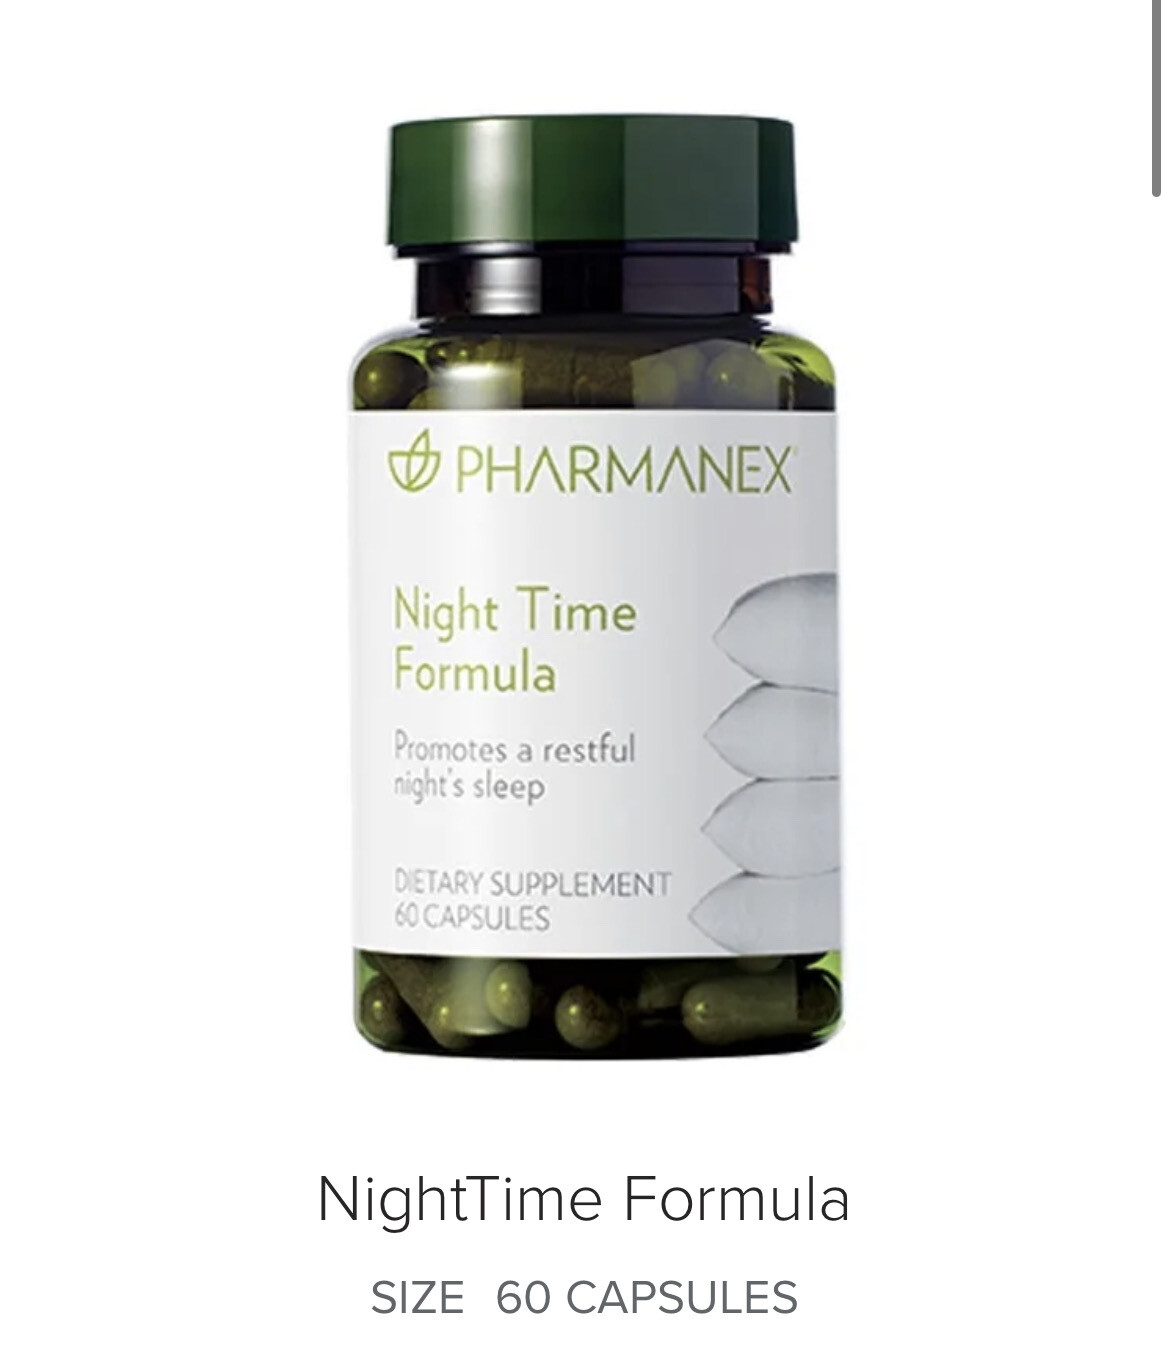 Nighttime Formula